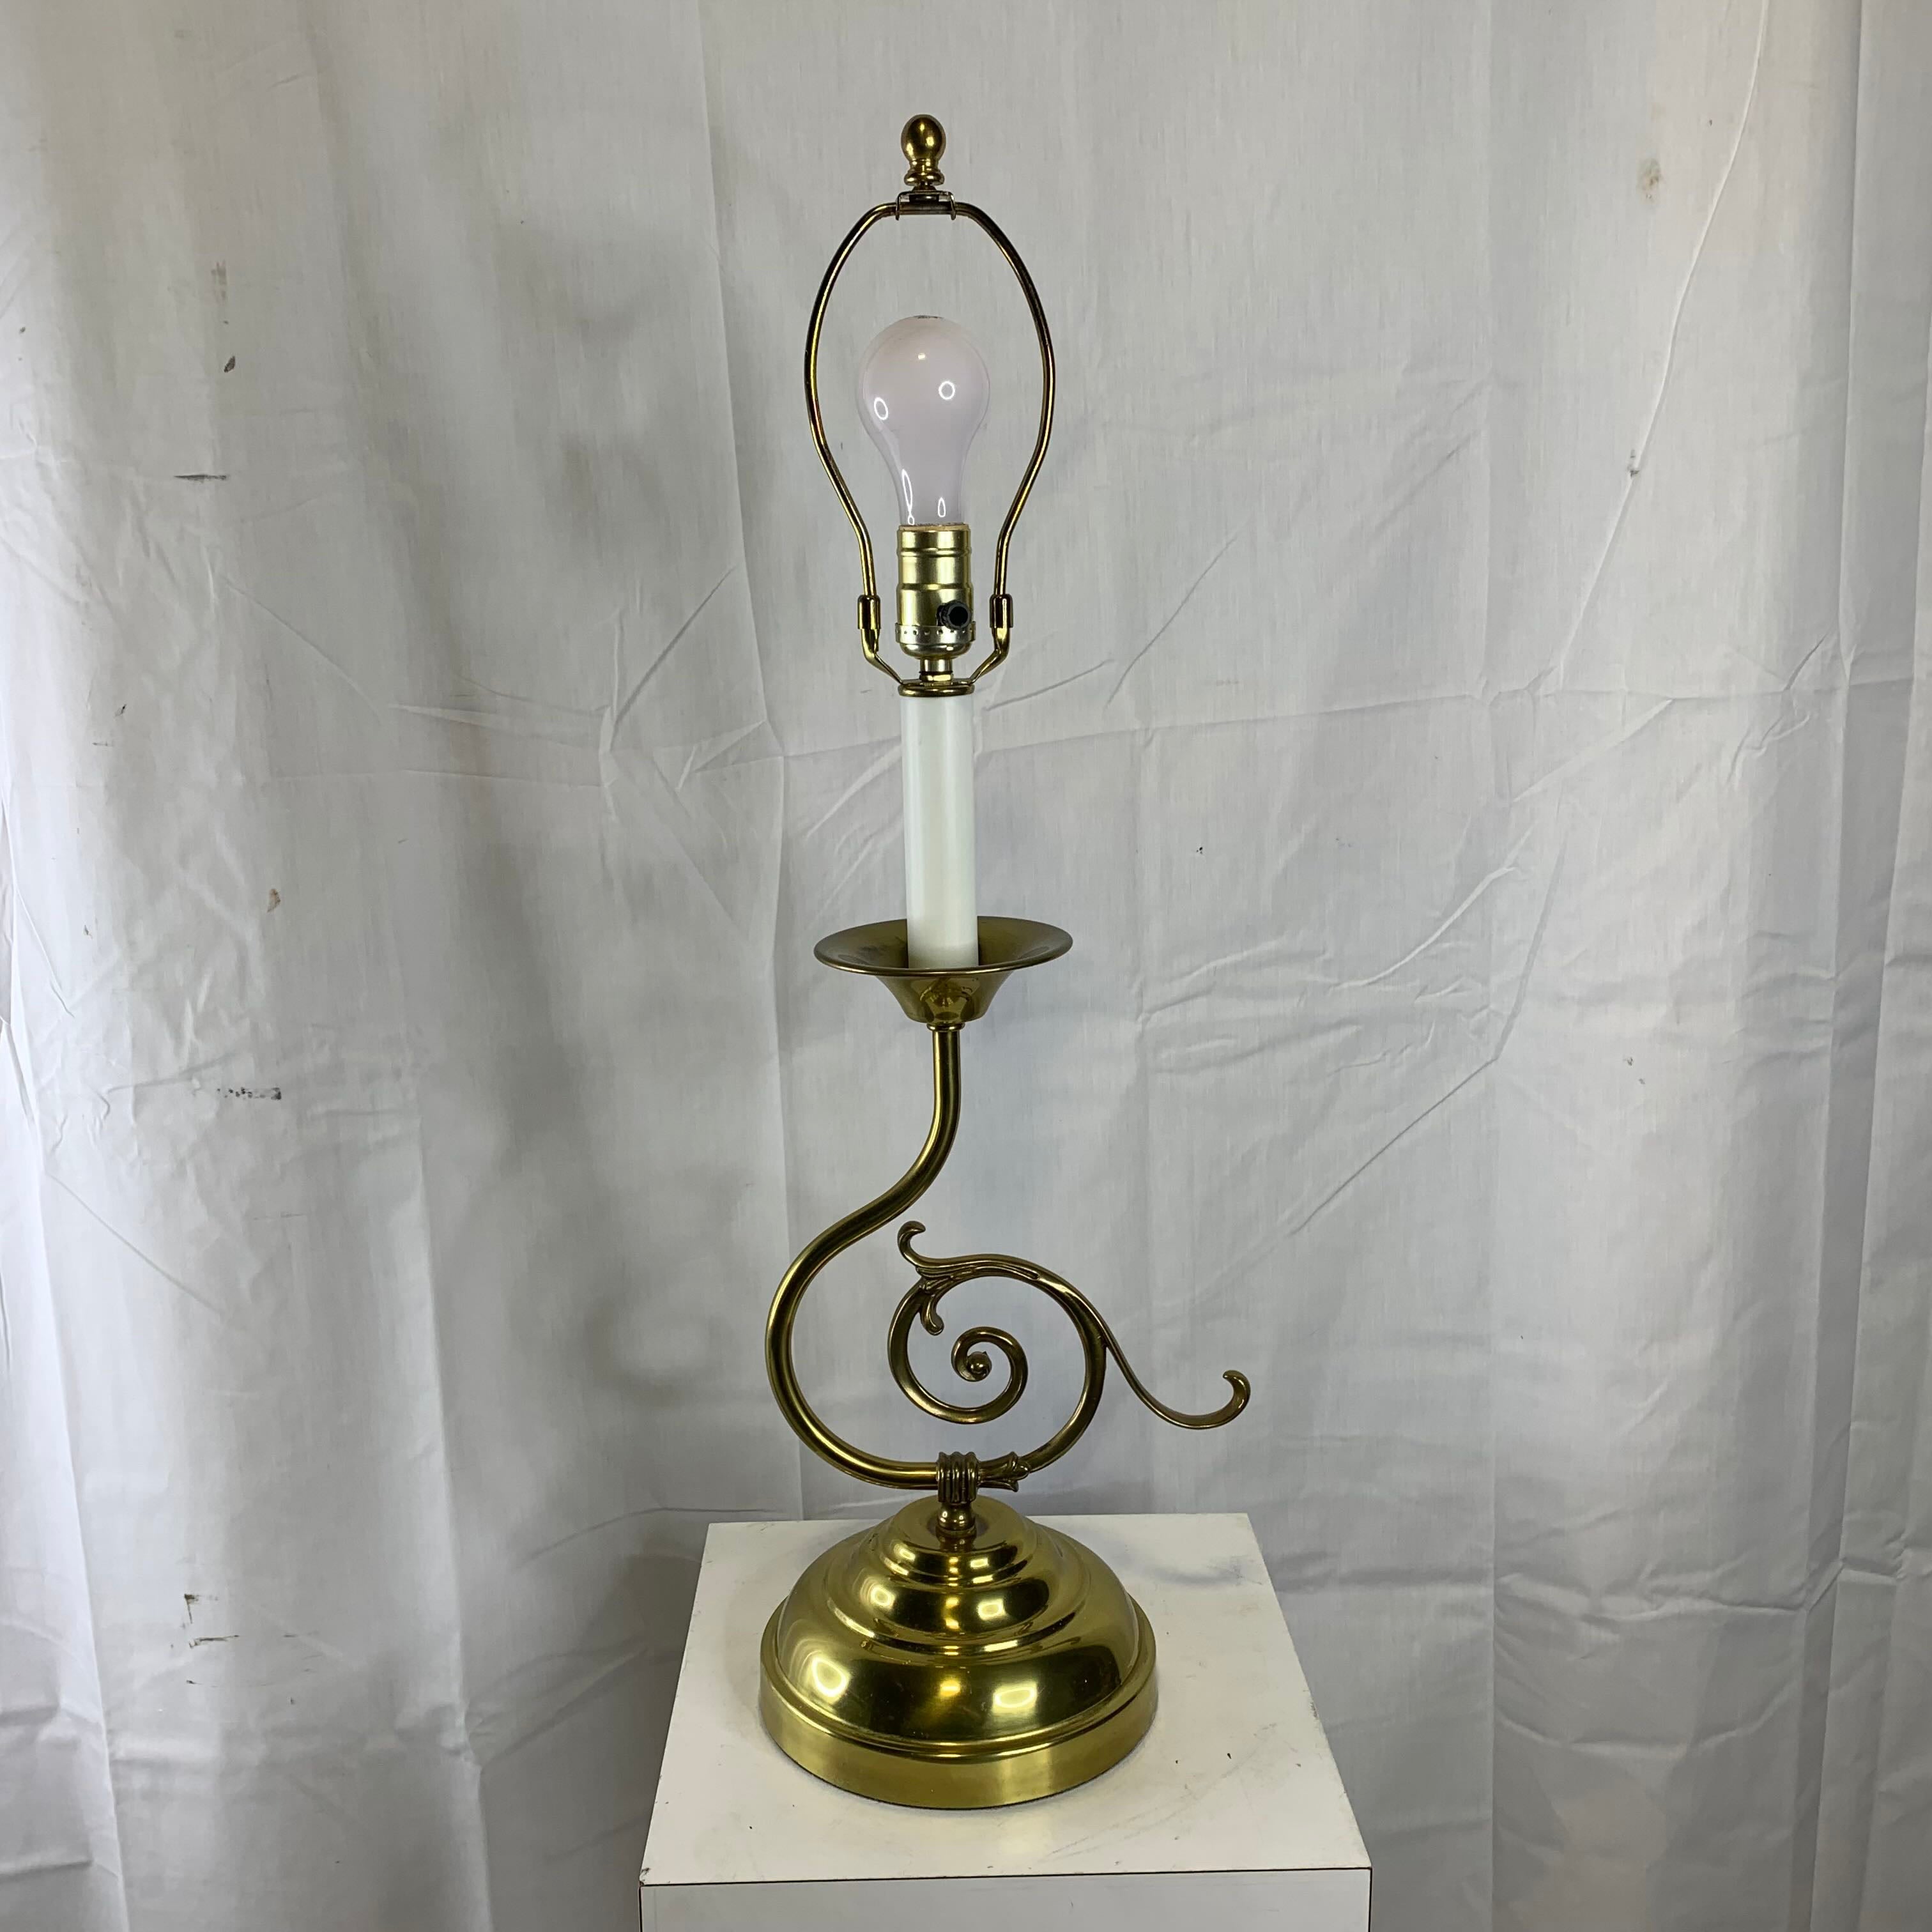 10"x 8"x 28.5" Brass Swirl Candlestick Table Lamp